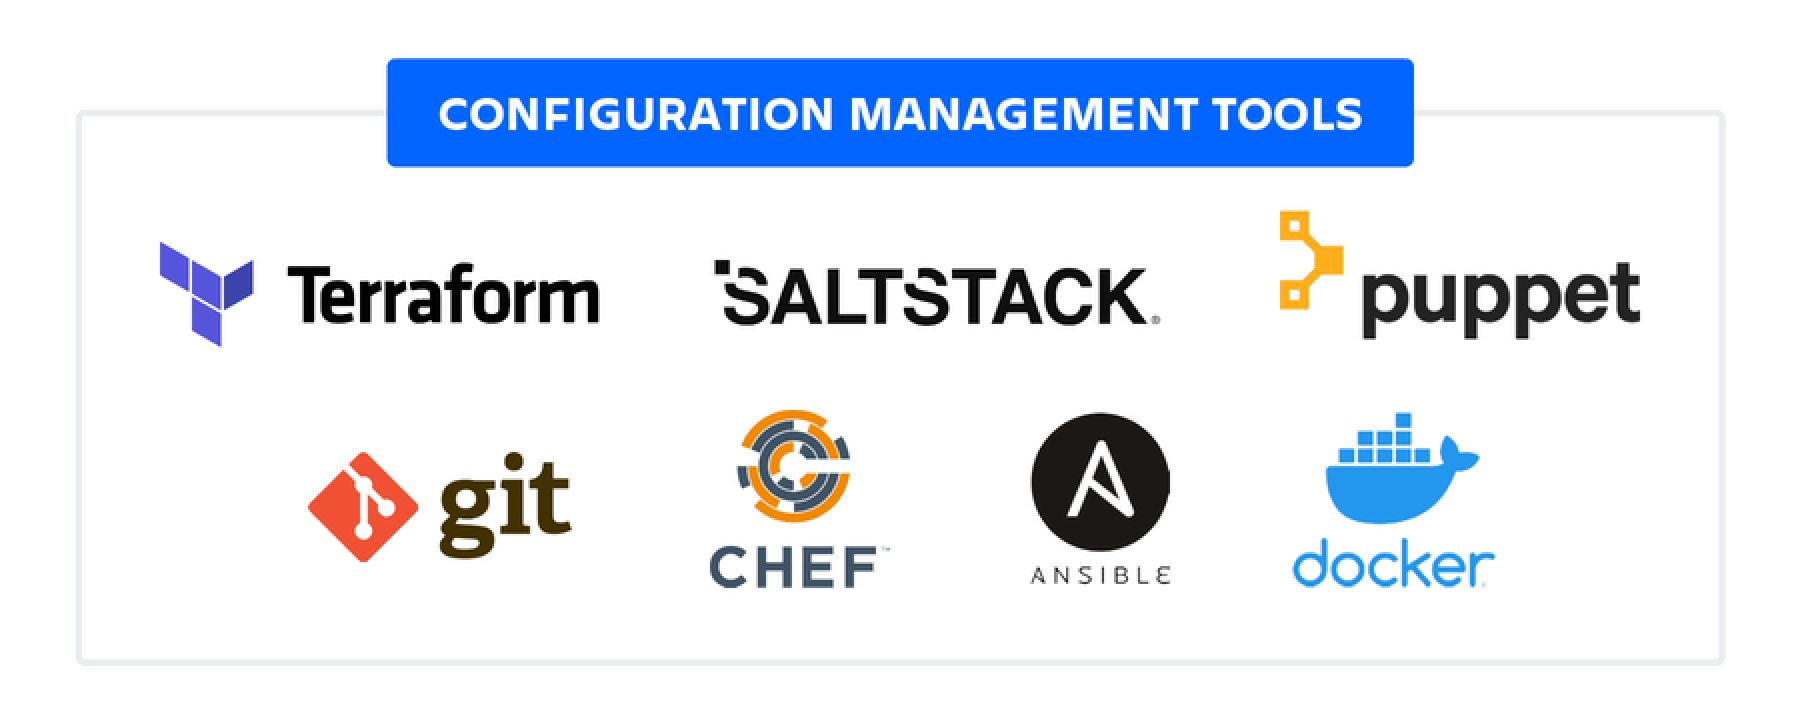 Configuration management tools: Terraform, Saltstack, Puppet, Git, Chef, Ansible, and Docker